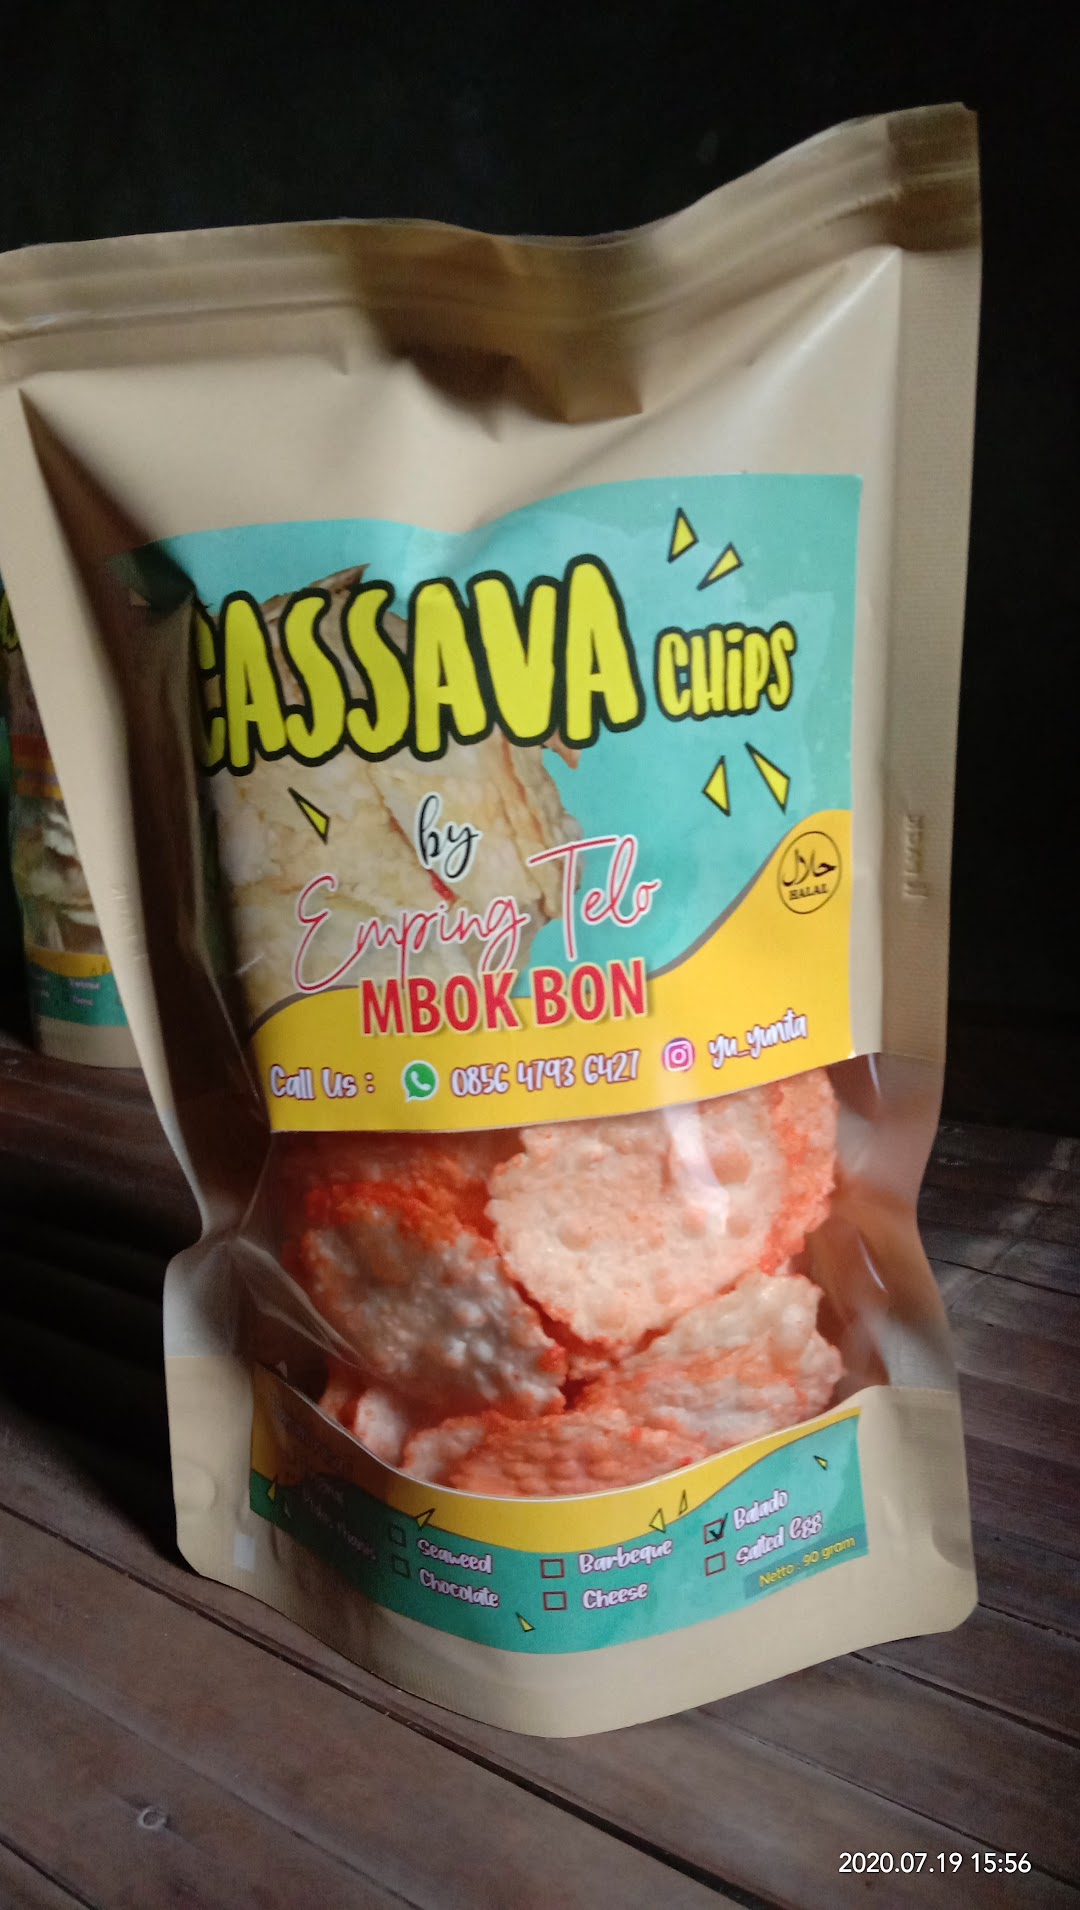 Cassava chips by Emping telo mbok bon